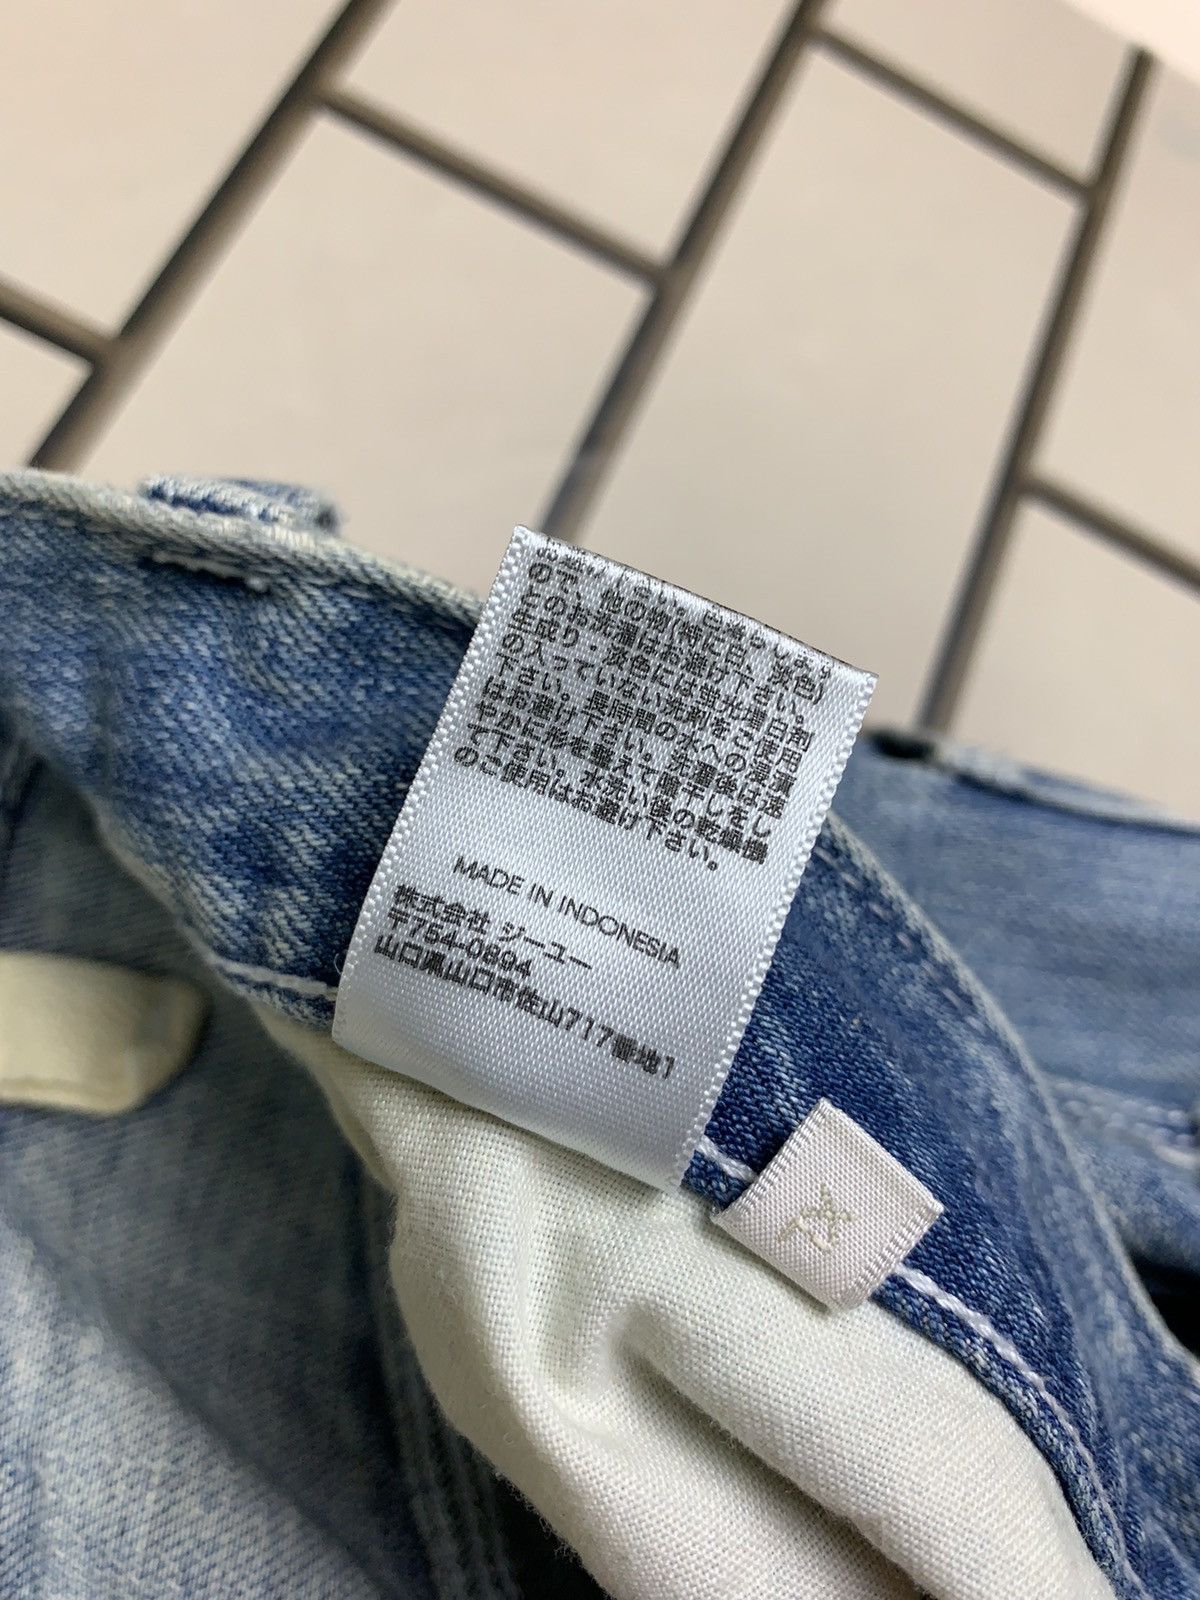 Japanese Brand Japanese Brand GU Workwear Denim Size US 35 - 17 Preview